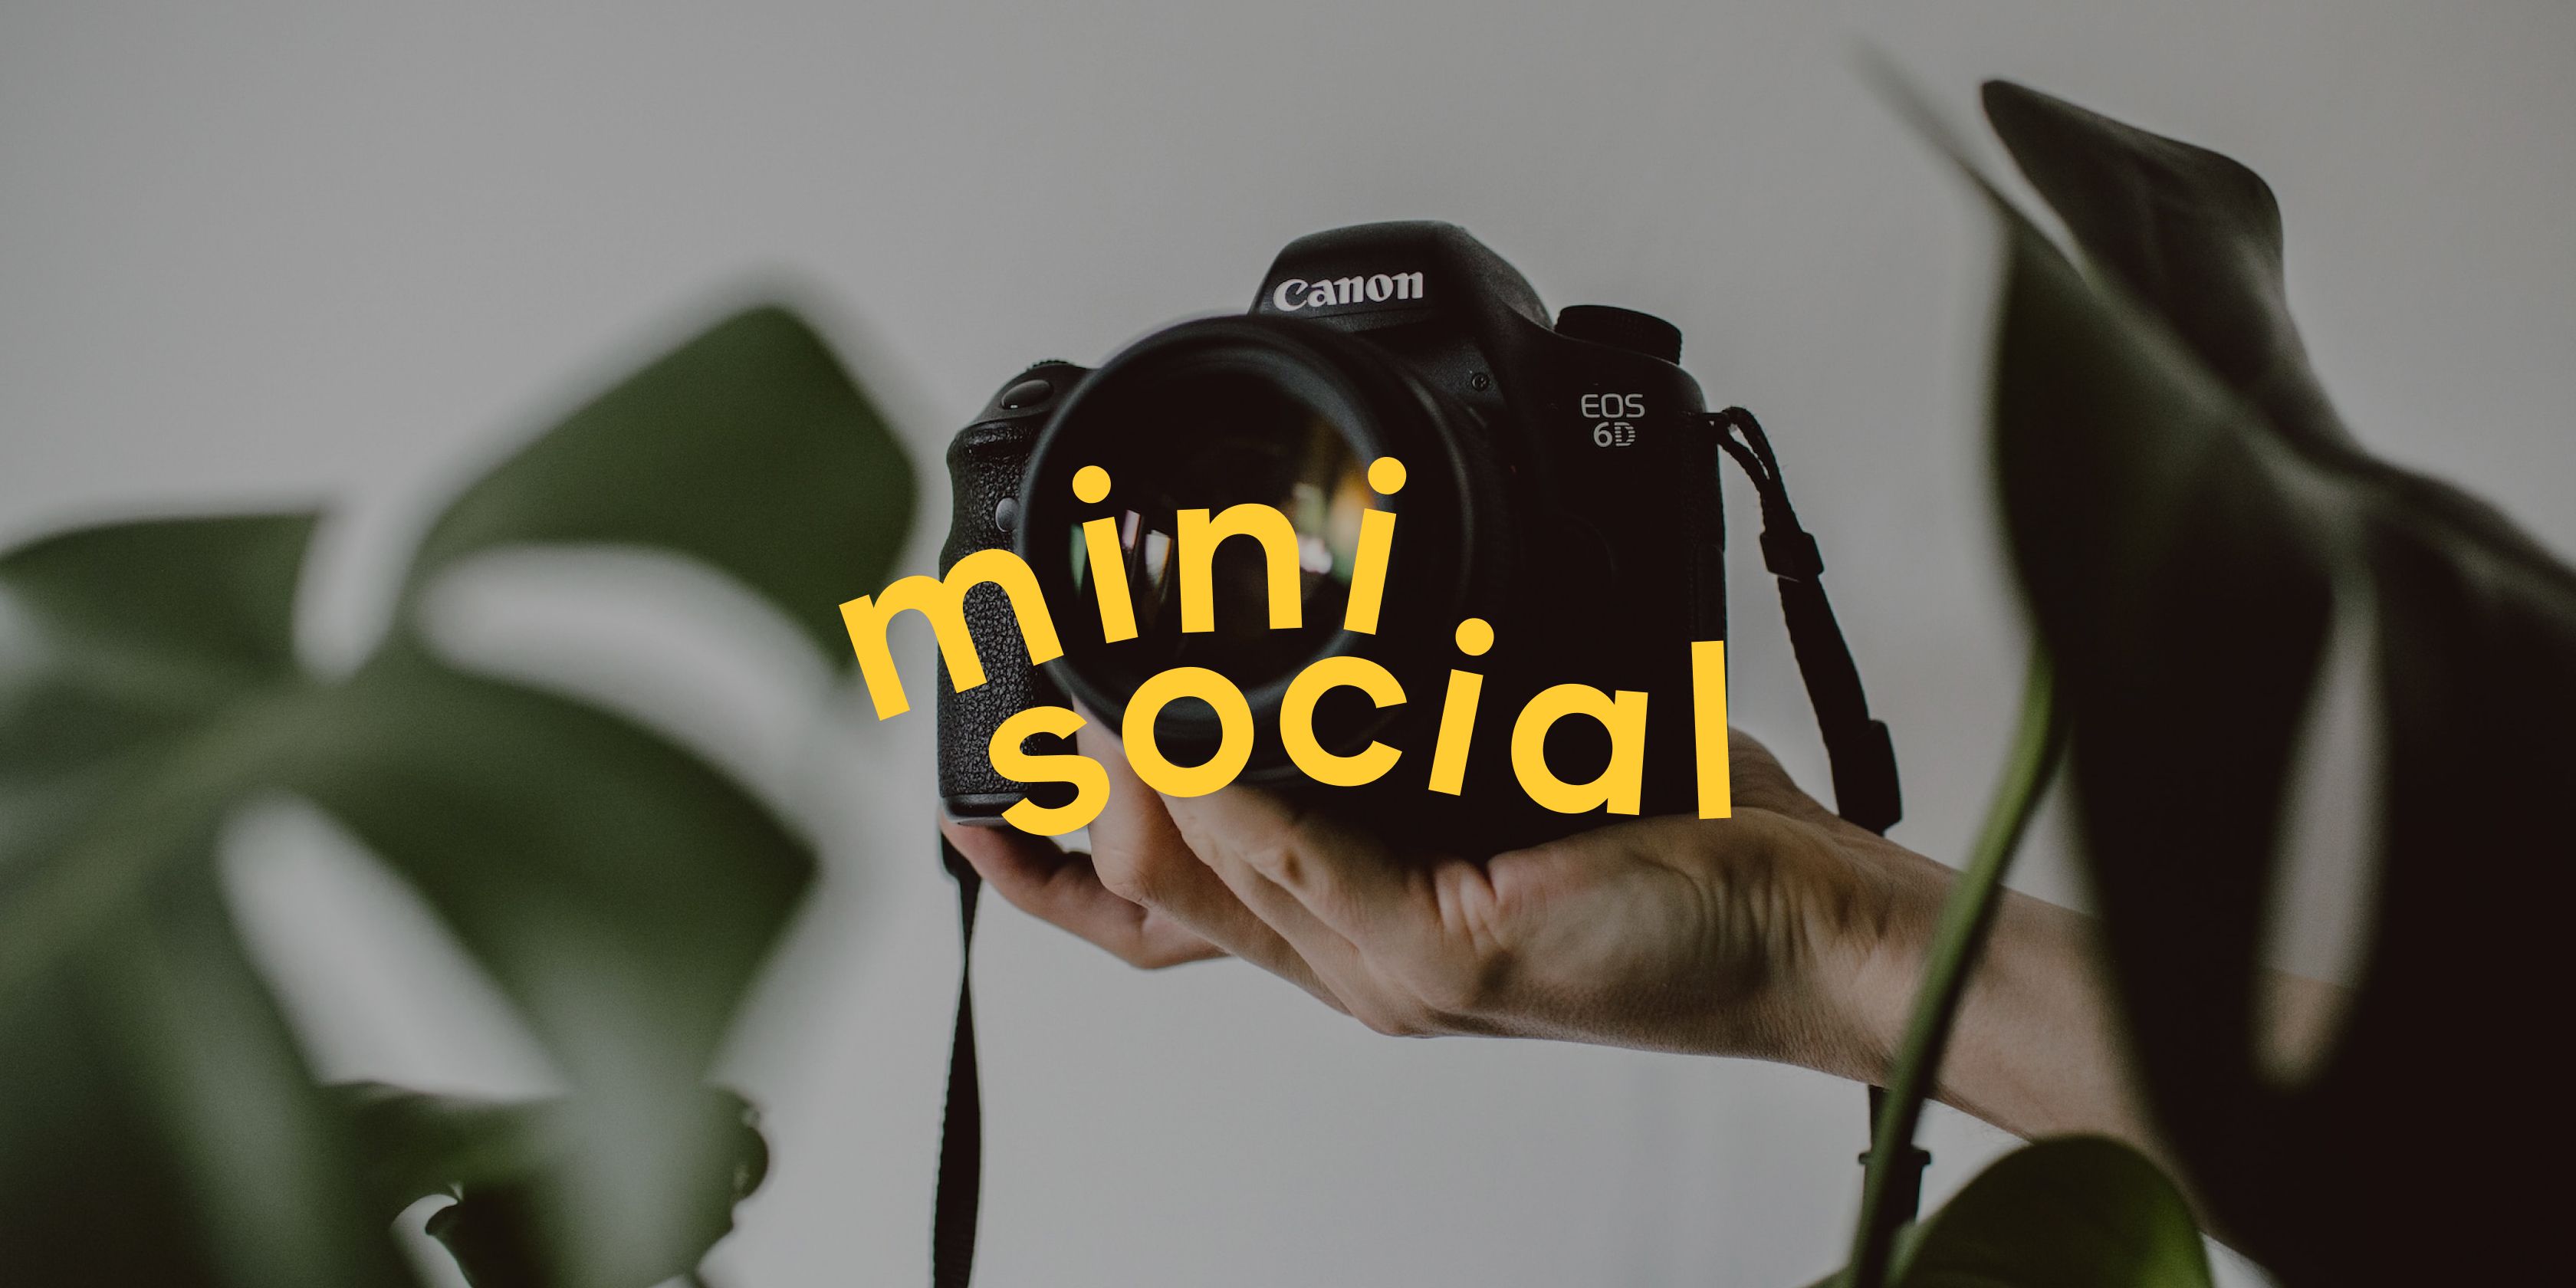 Minisocial logo over man holding a camera